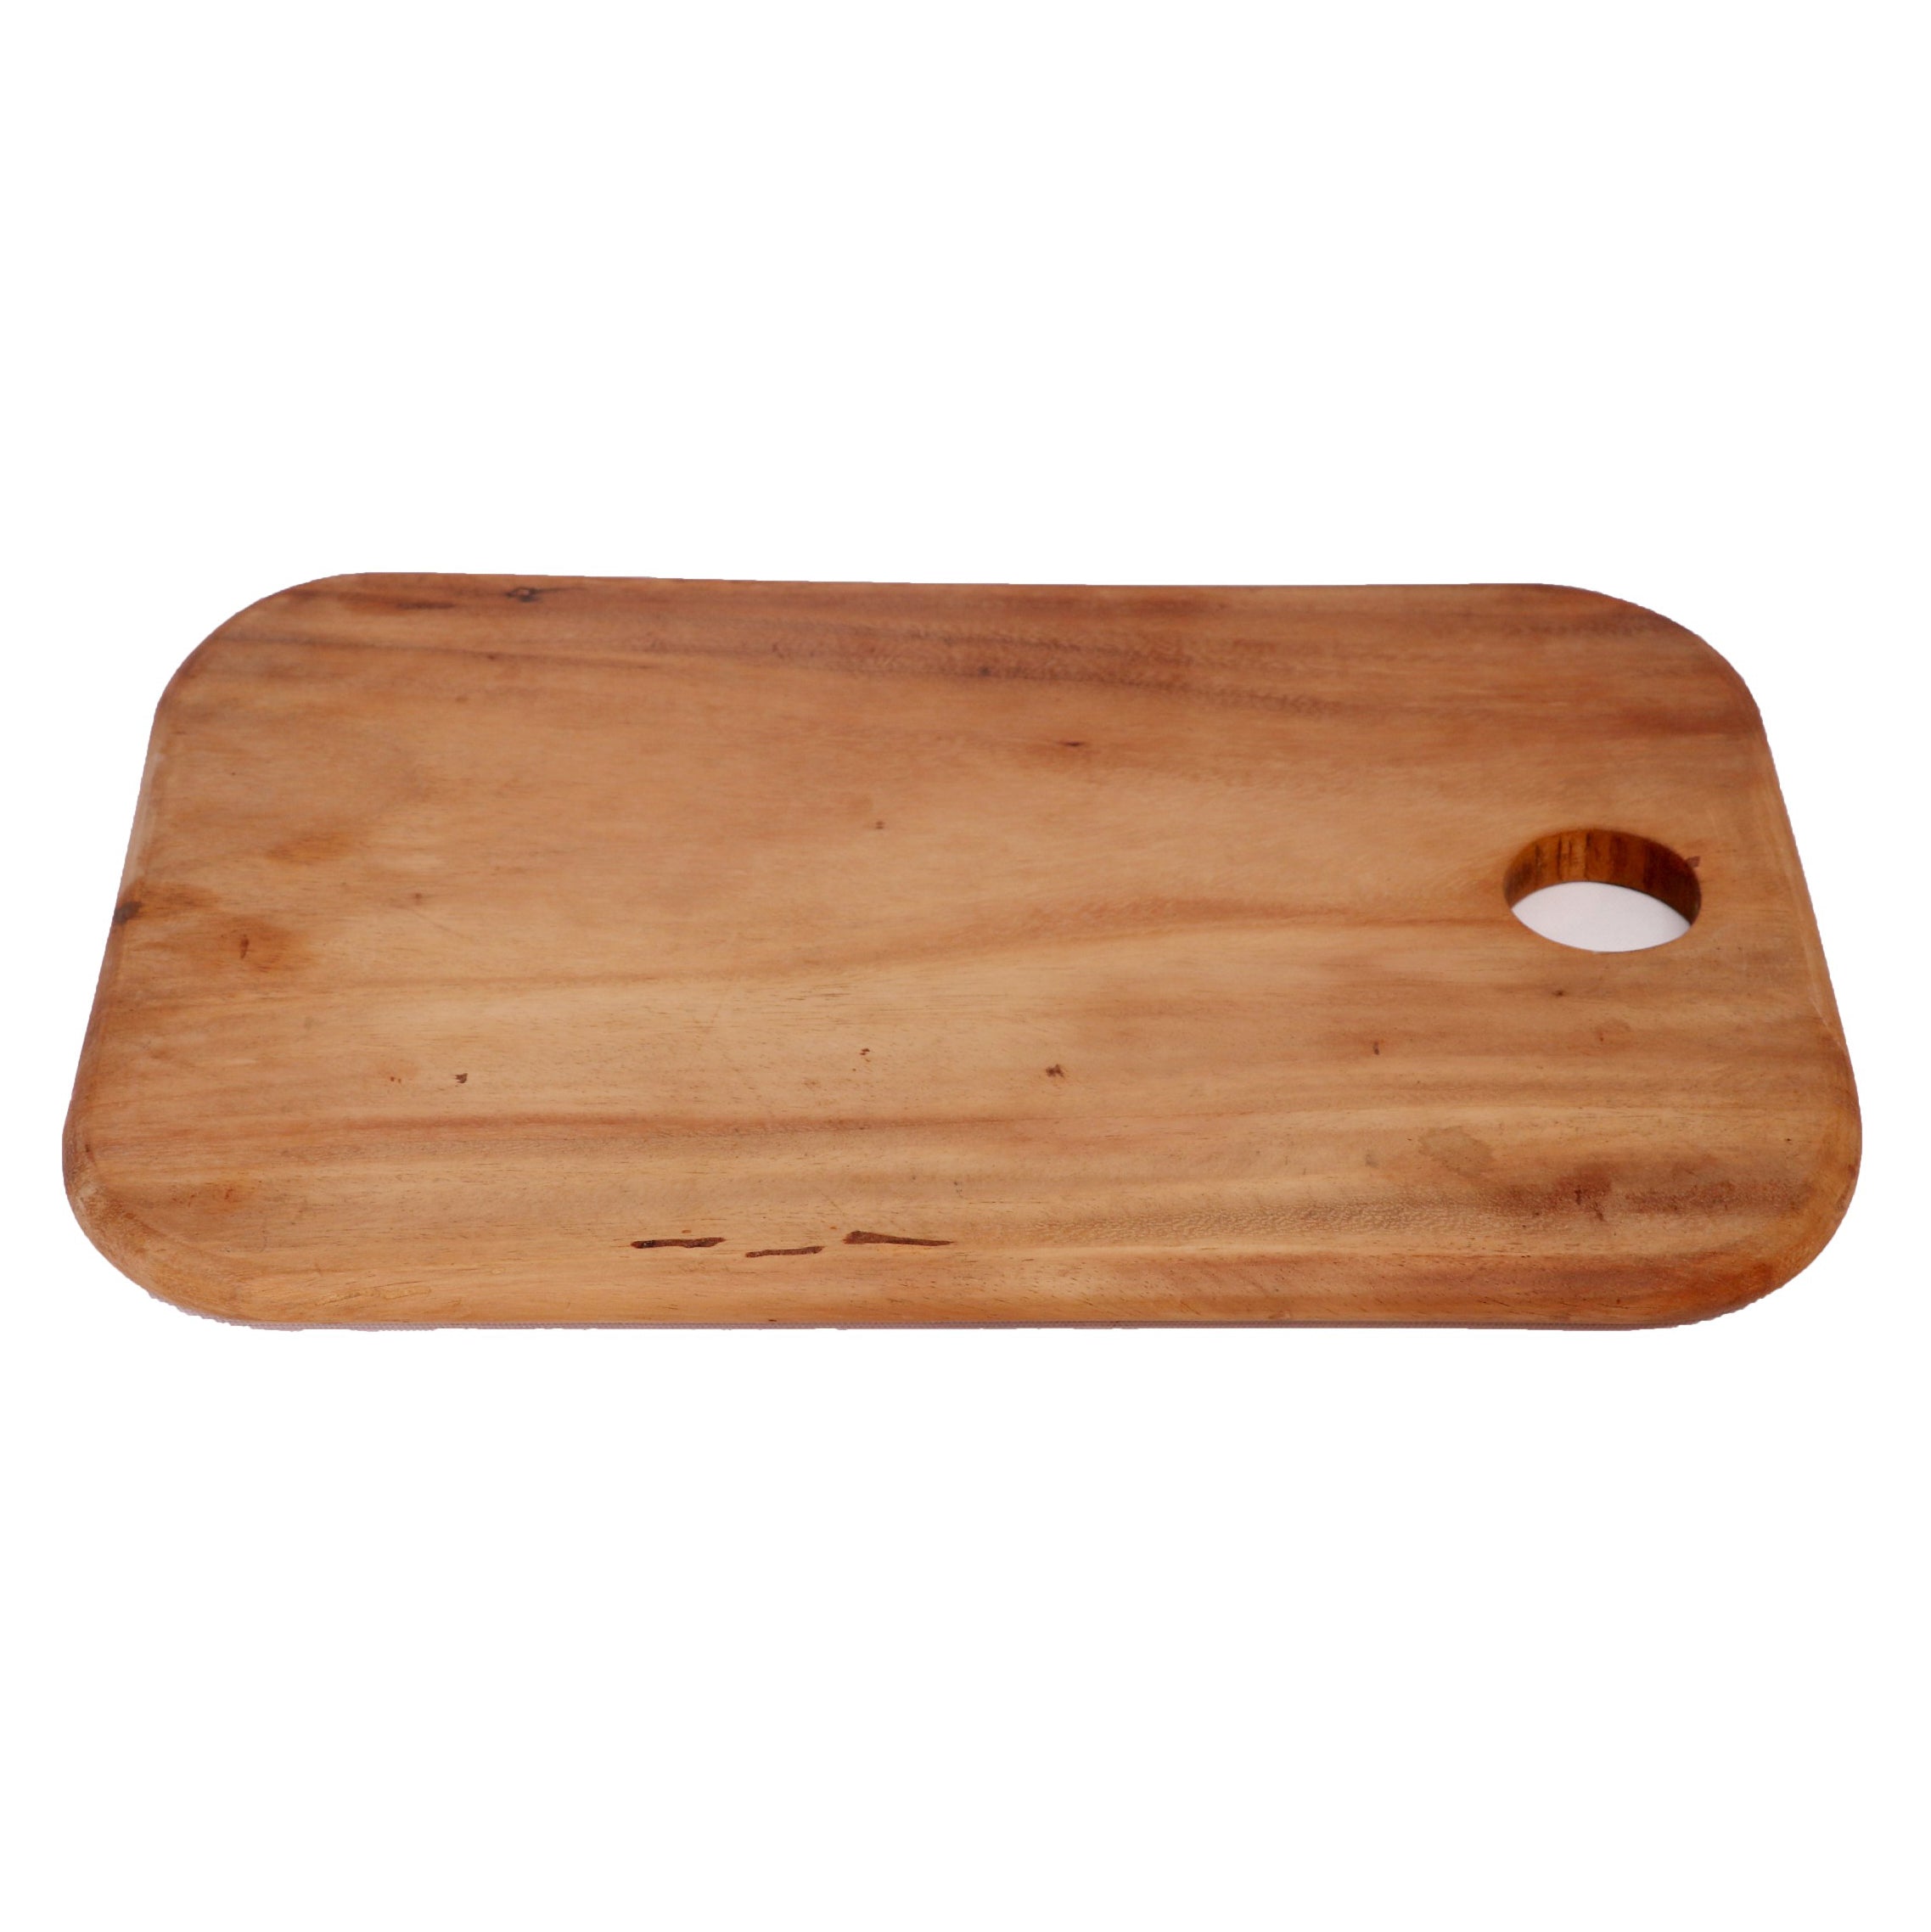 Classic Wooden Chopping Board Cutting Board